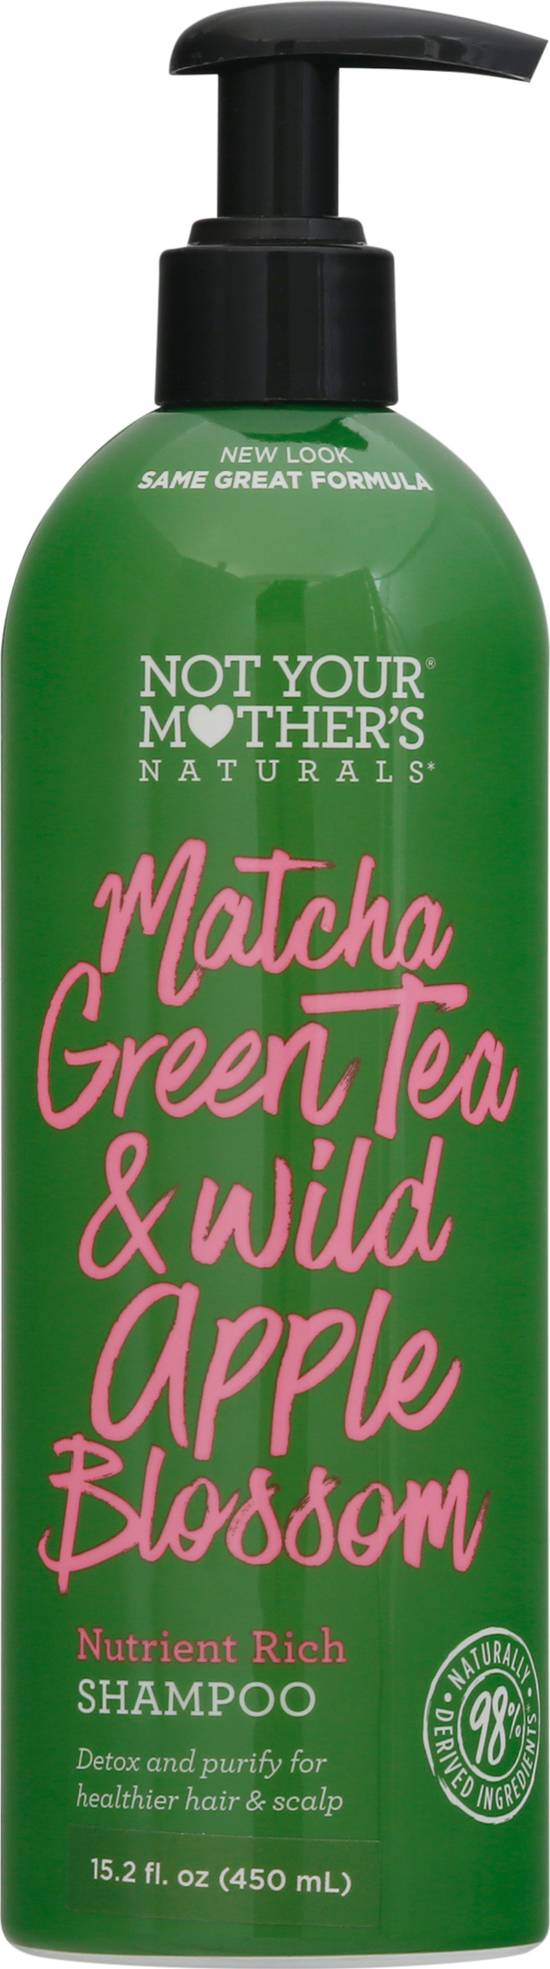 Not Your Mother's Naturals Nutrient Rich Matcha Green Tea & Wild Apple Blossom Shampoo Bottle